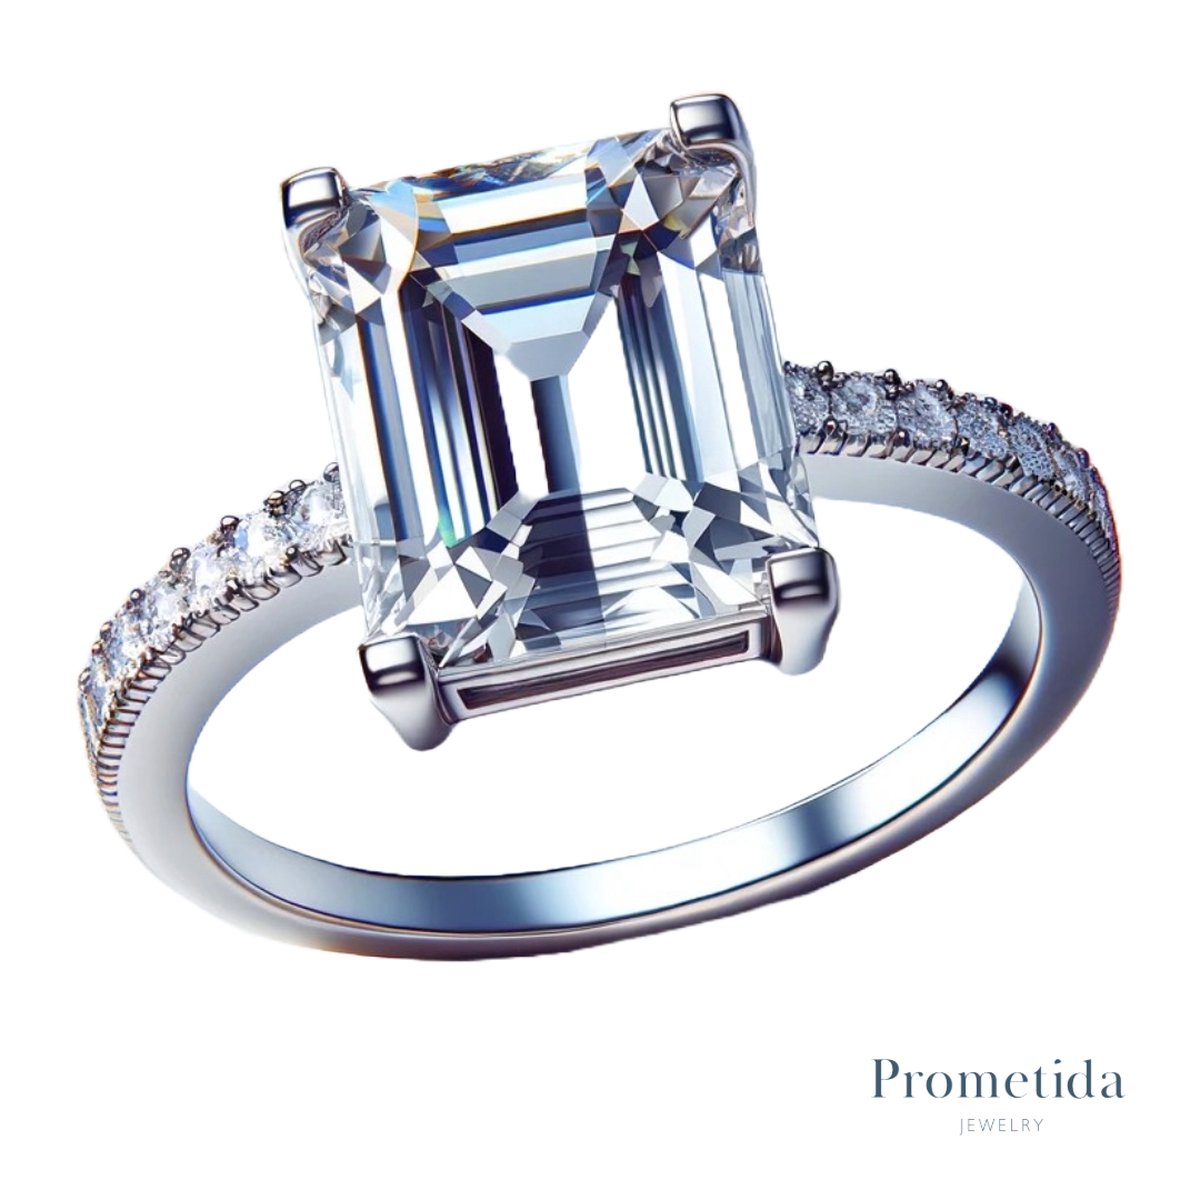 Prometida - Ringenset - Verlovingsring - Ring dames - Emerald-cut Solitair pavé - Zirkonia steen - Sterling Zilver 925 - Aanschuifring pavé in v-vorm - Uitgesproken ring